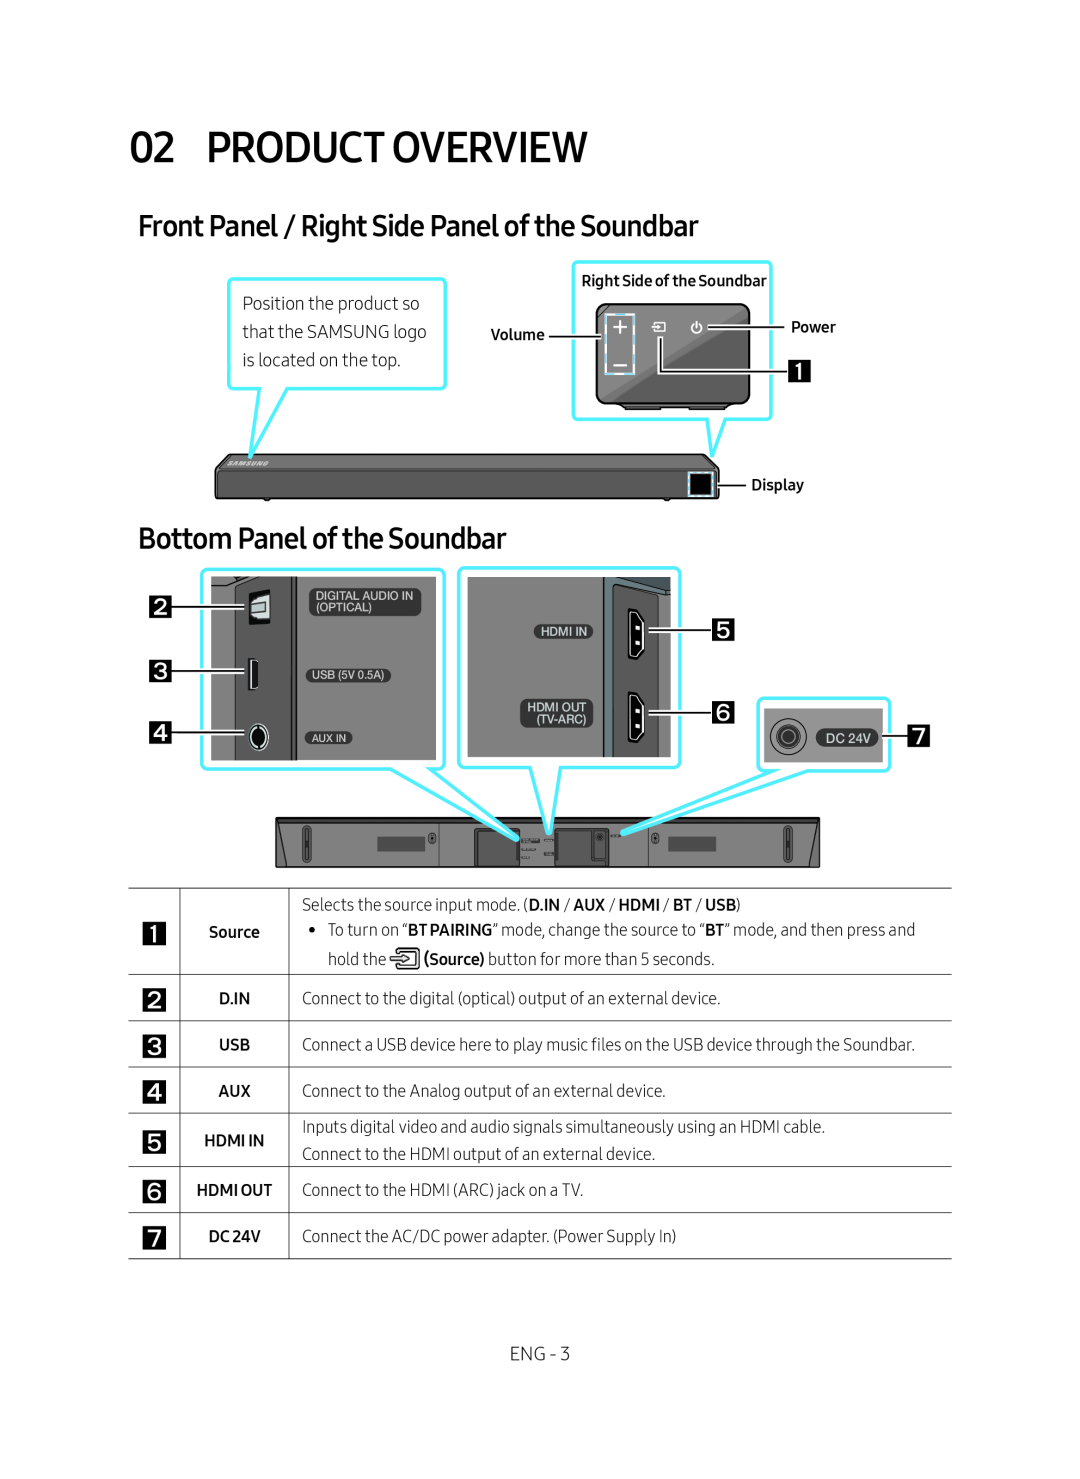 Front Panel / Right Side Panel of the Soundbar Standard HW-R550